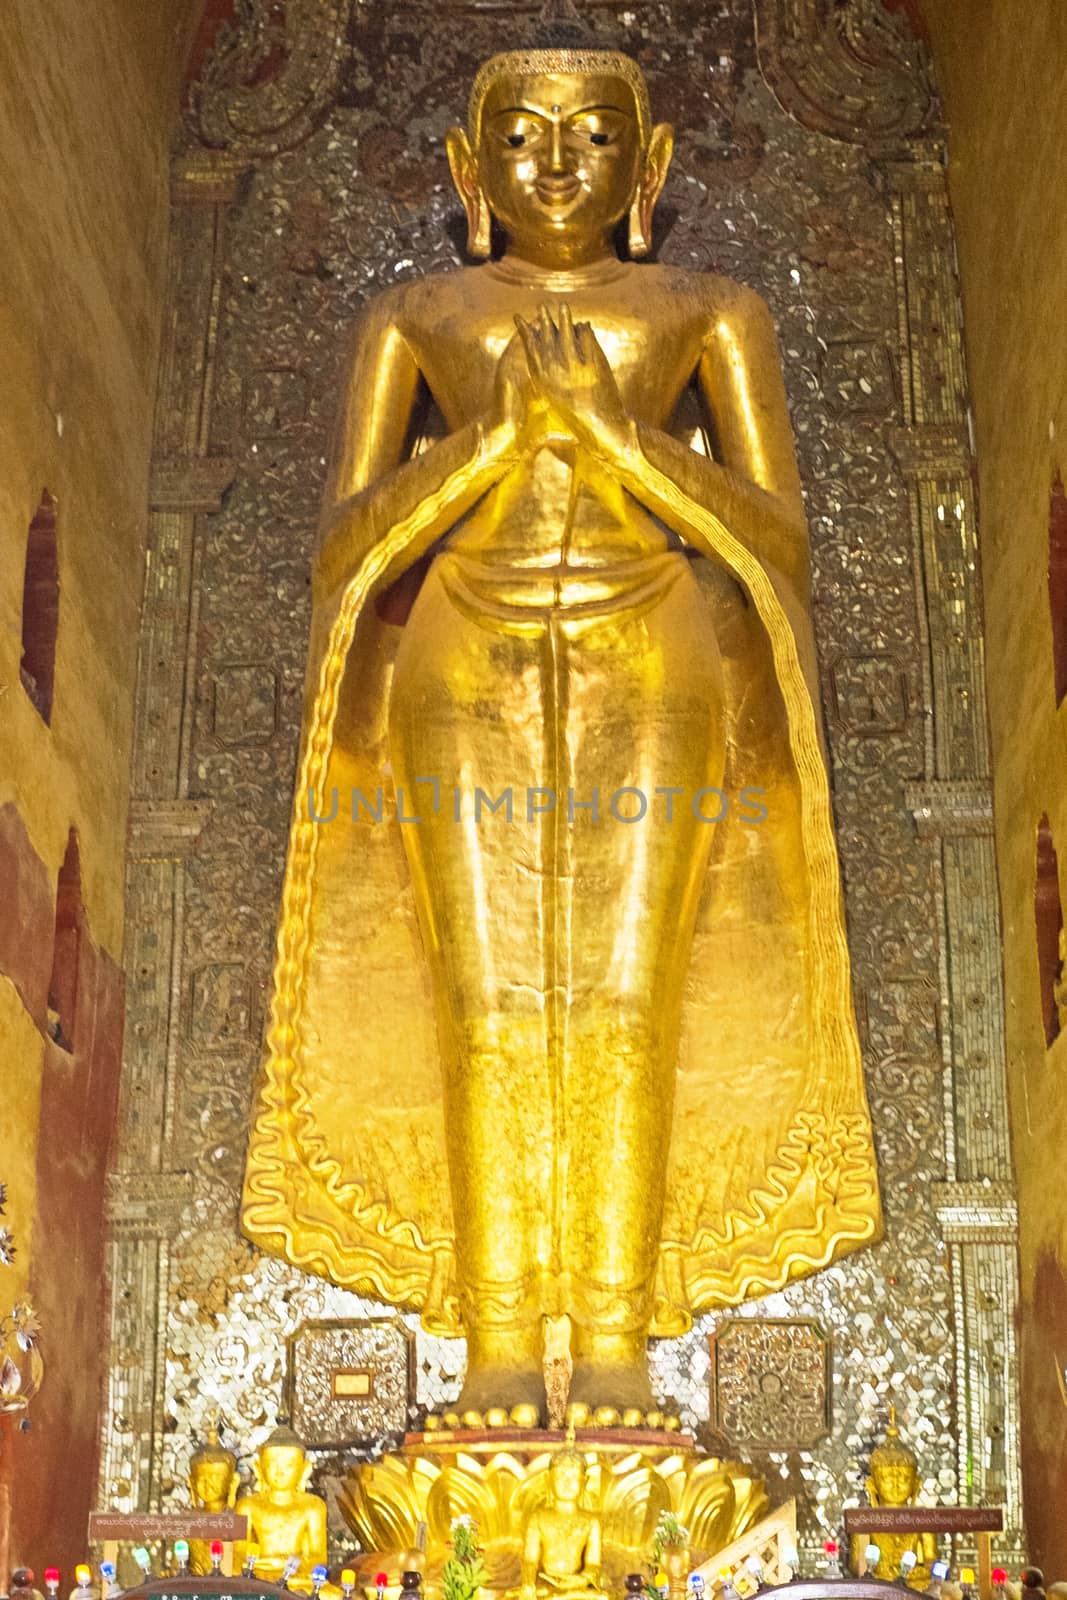 Buddha statue in Bago Myanmar by devy